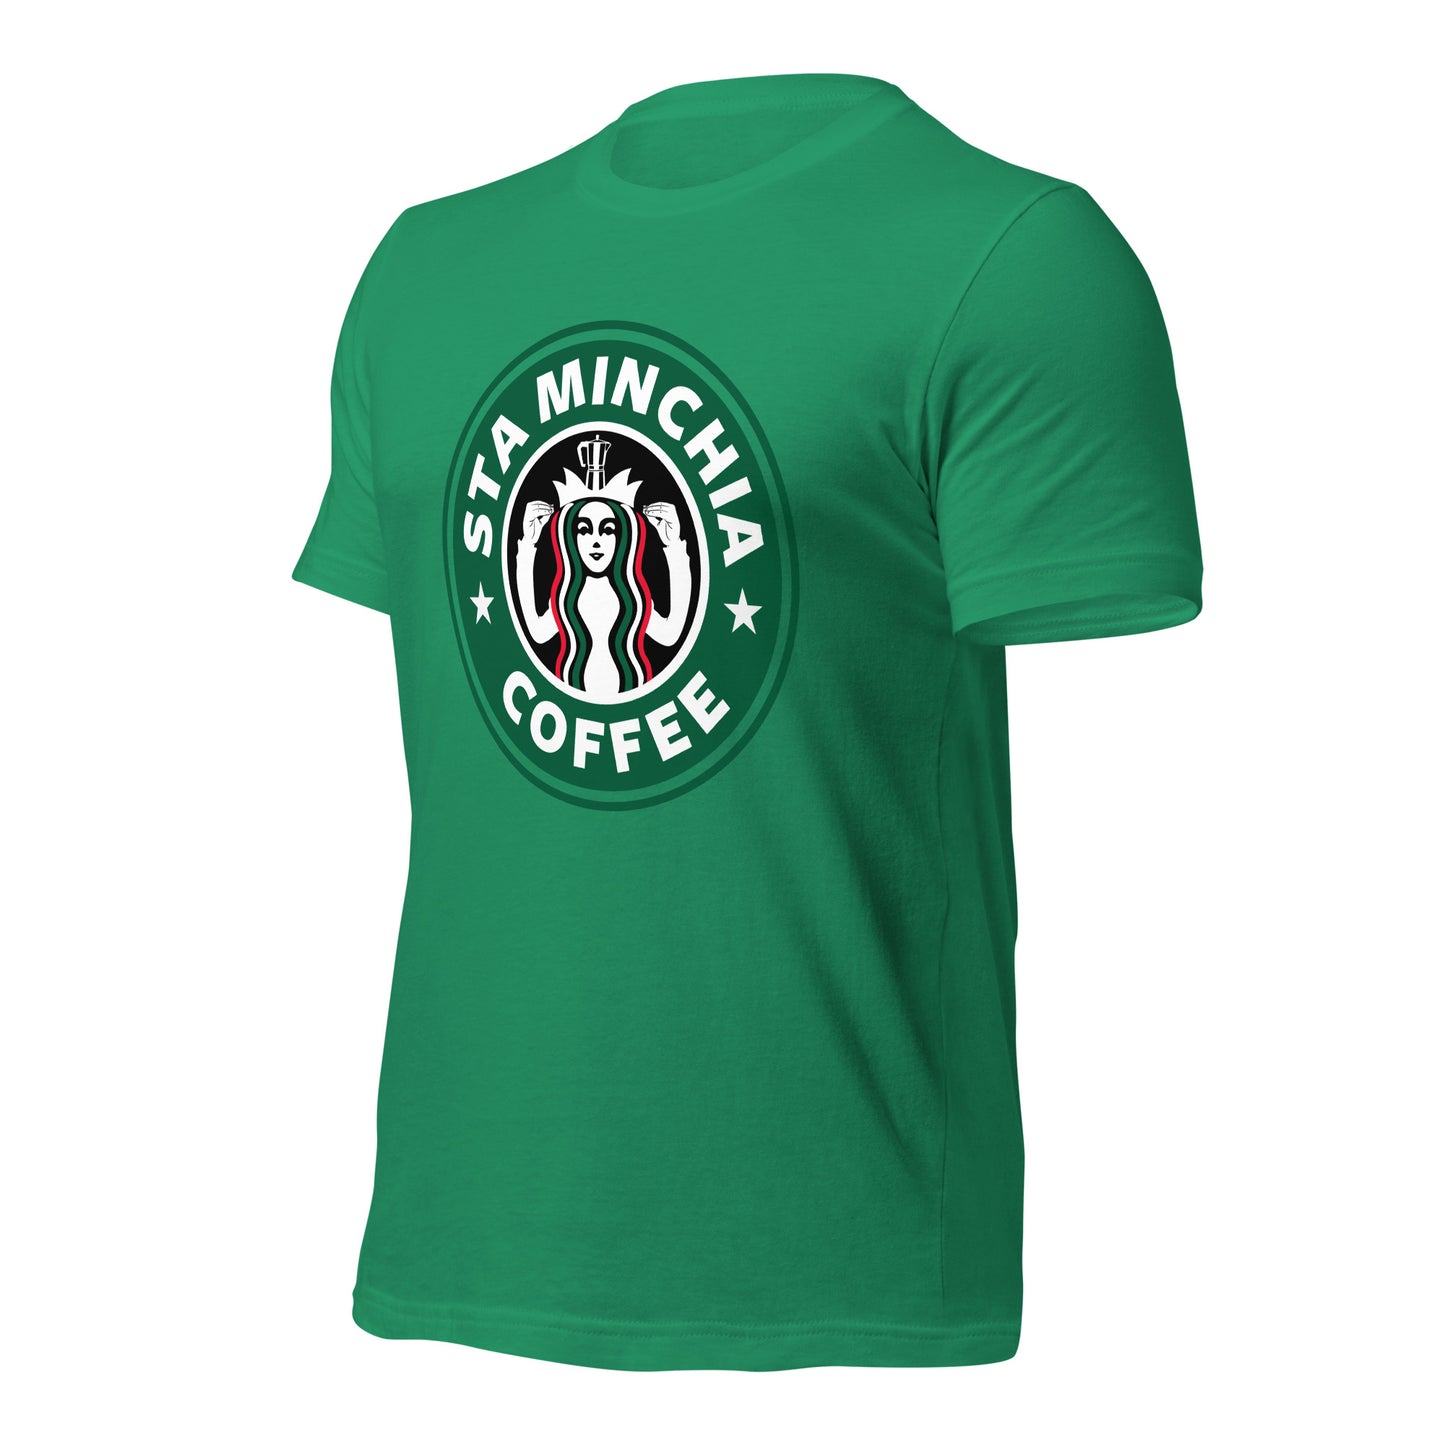 Sta Minchia Coffee - Unisex t-shirt